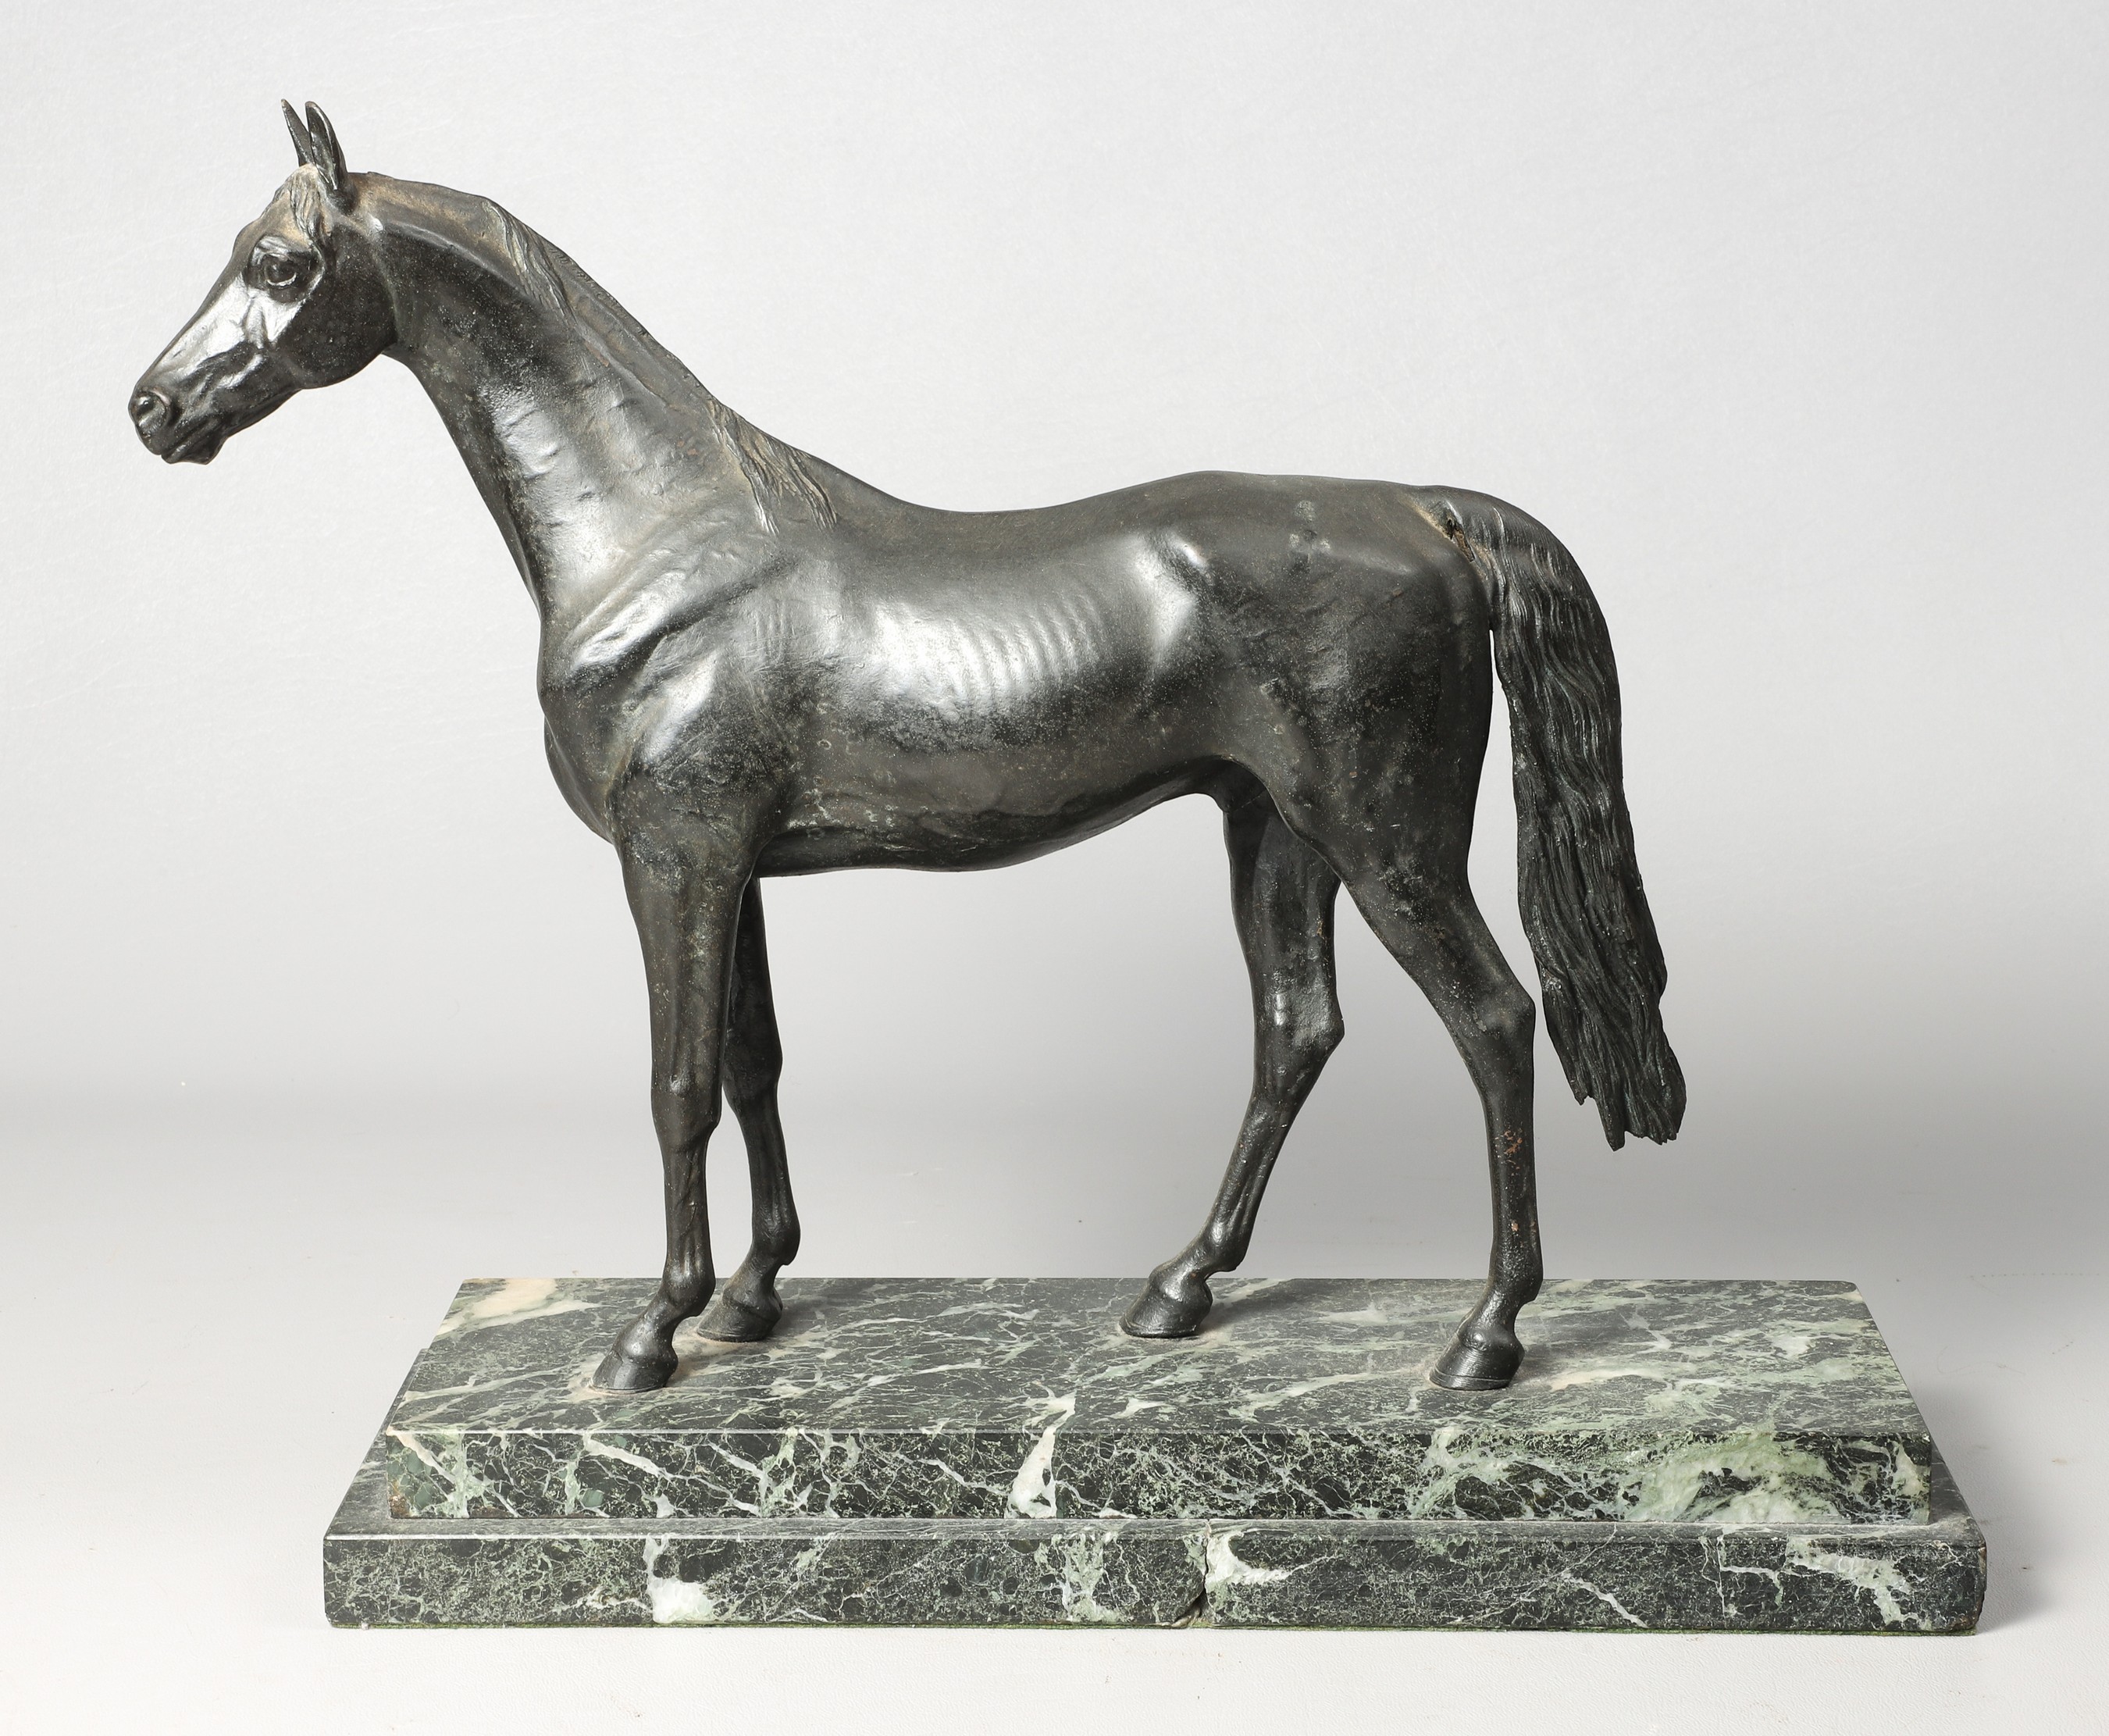 A Bronze sculpture of a horse on